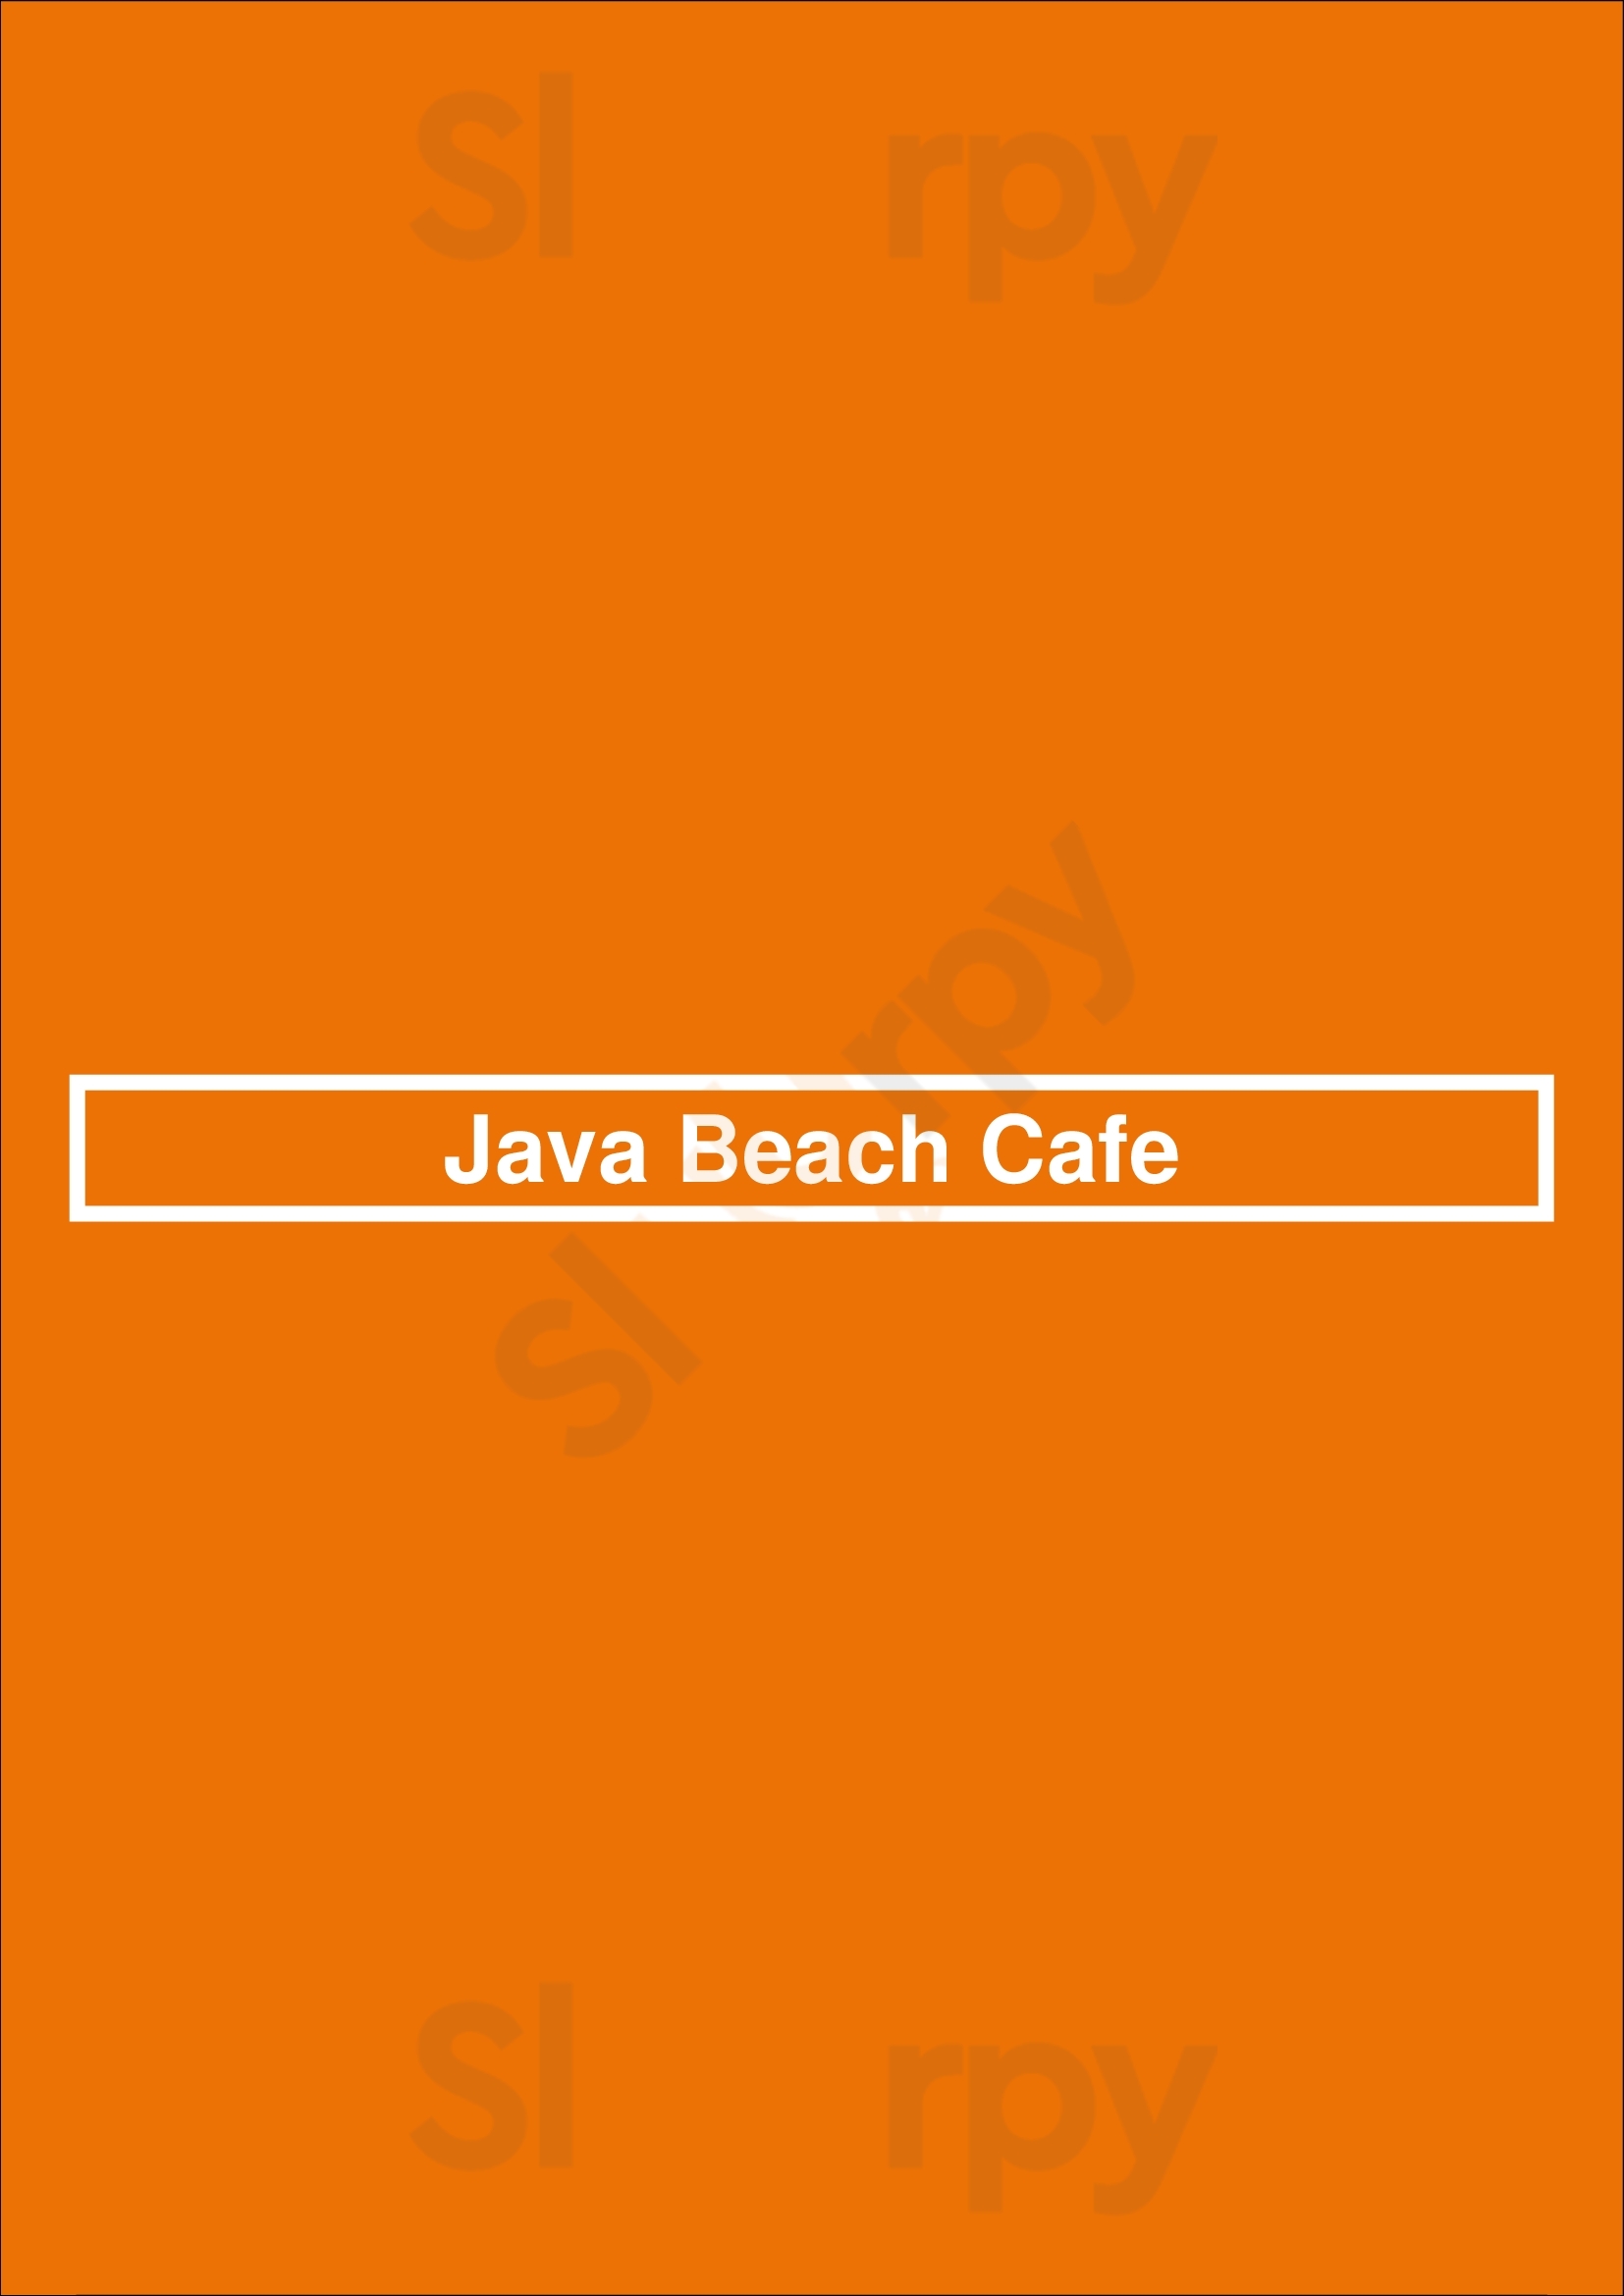 Java Beach Cafe San Francisco Menu - 1